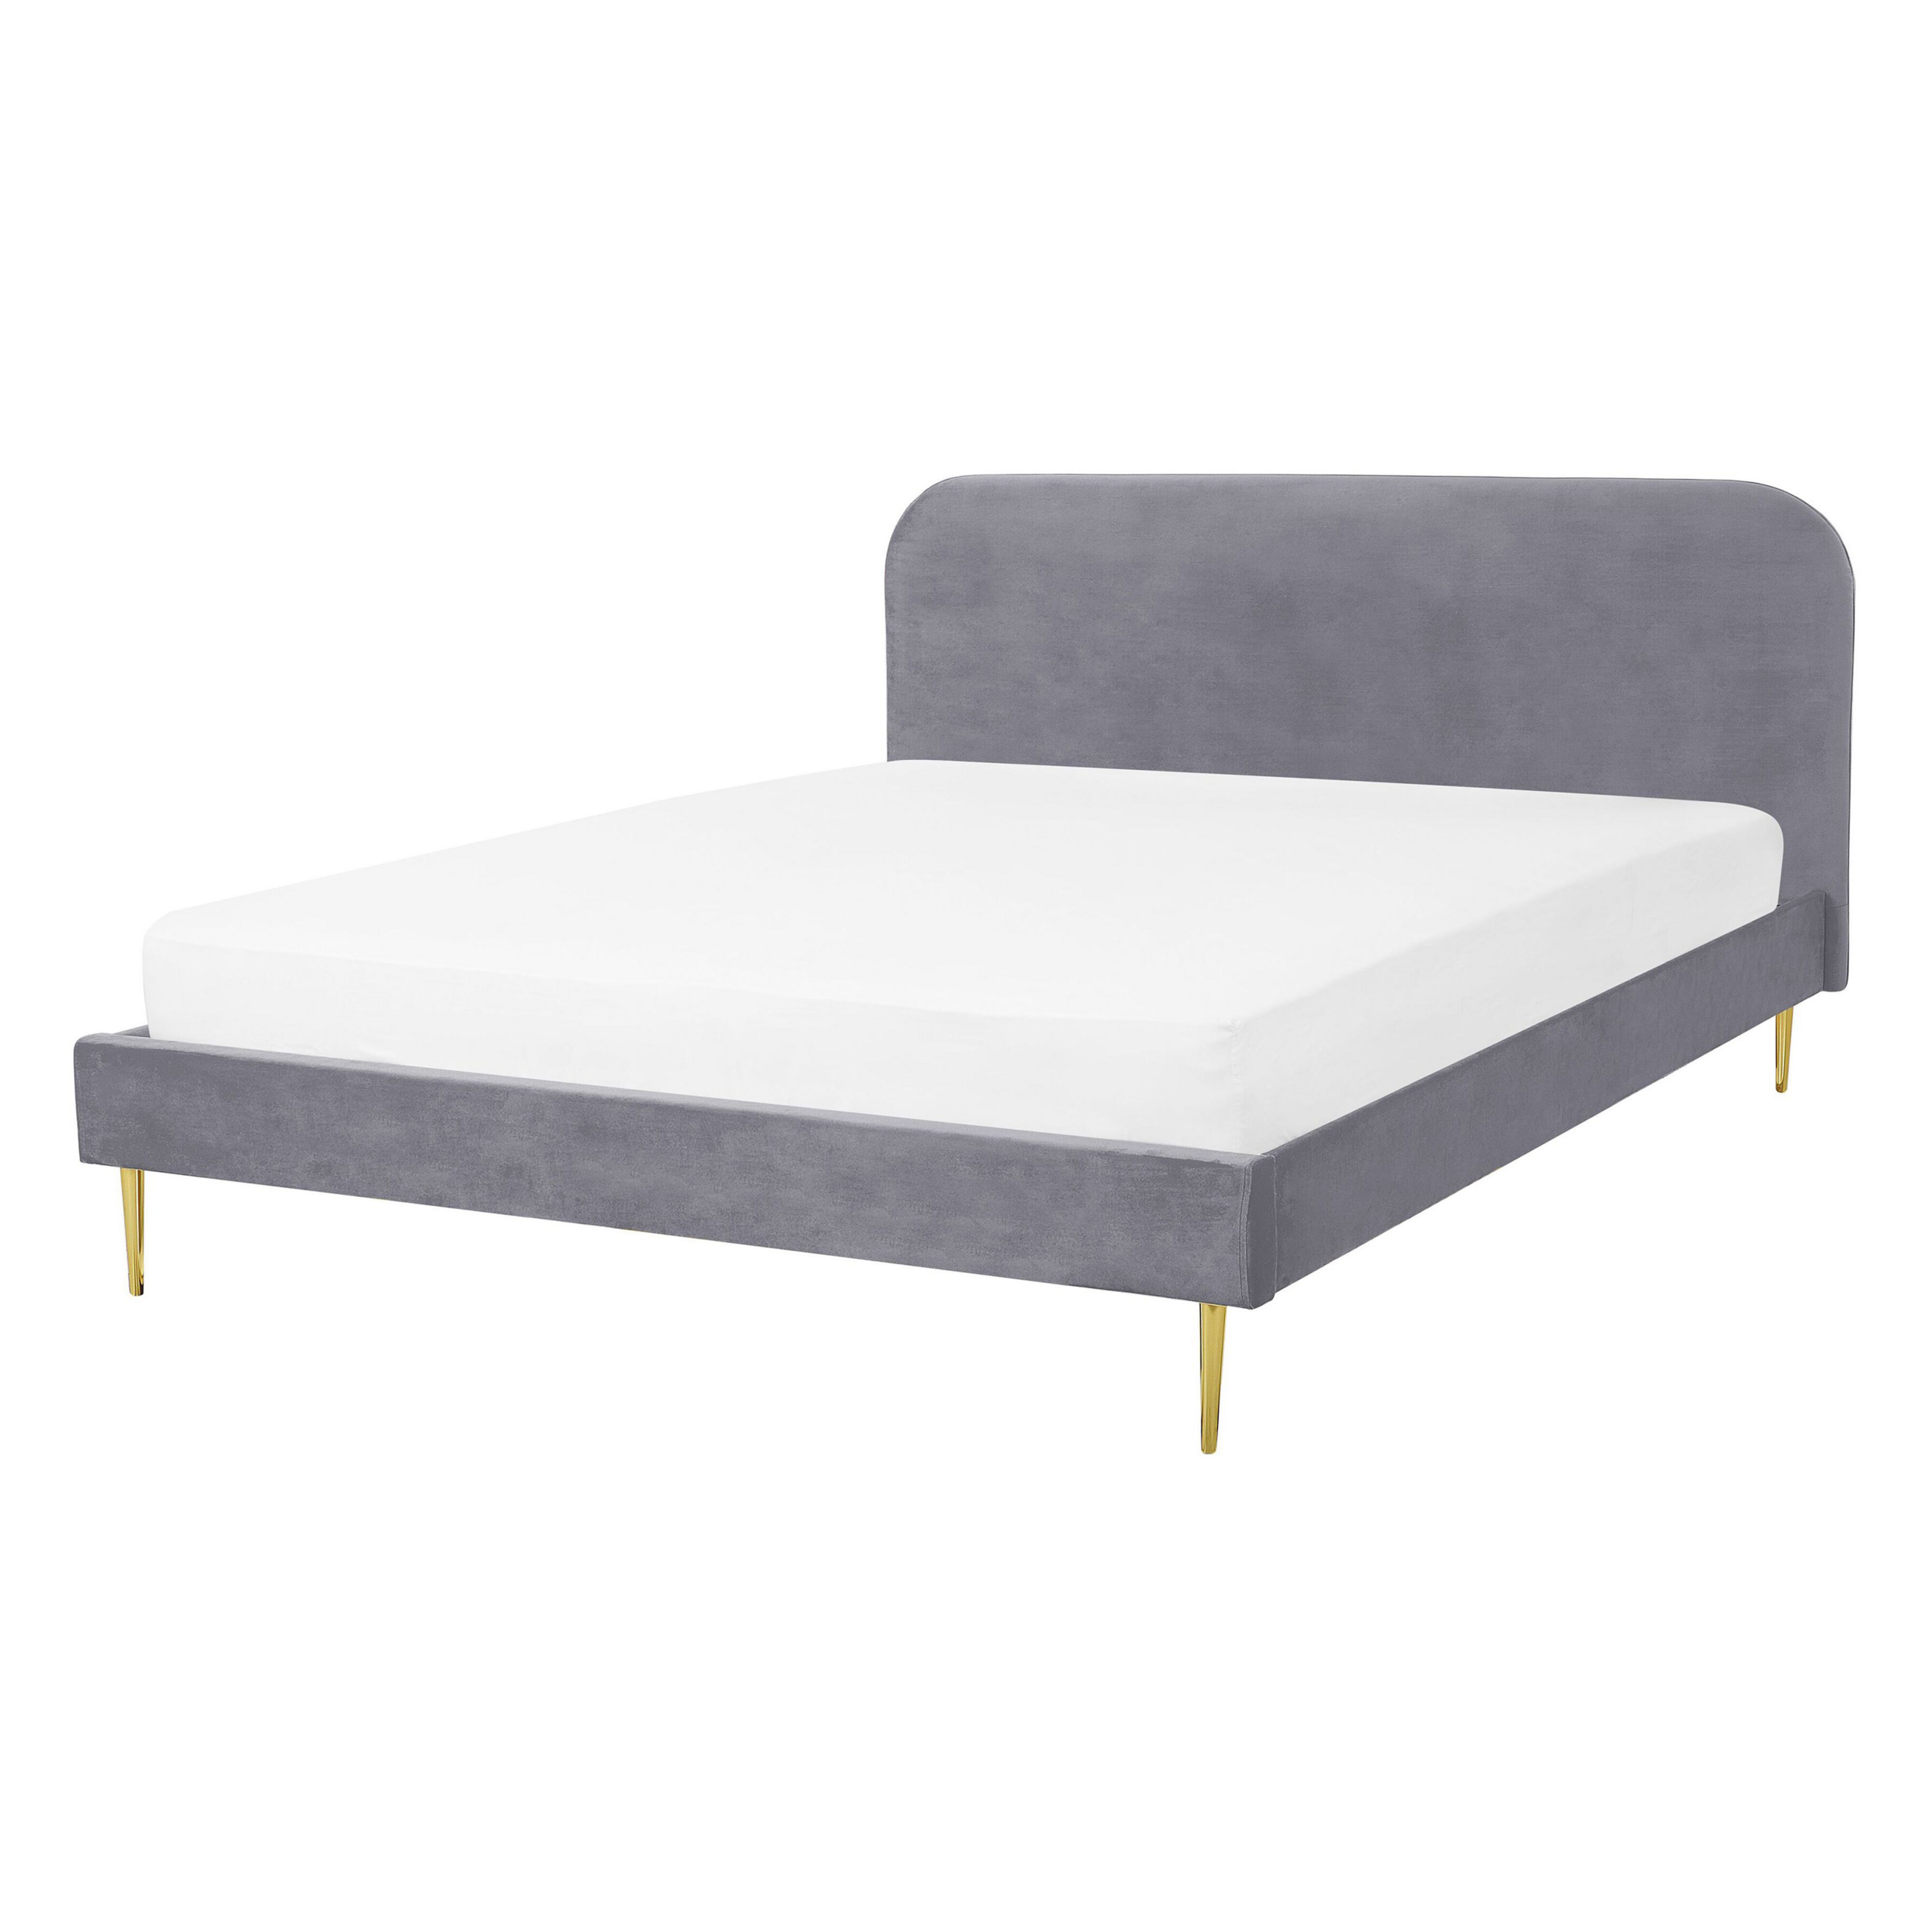 Beliani Bed Grey Velvet Upholstery EU Double Size Golden Legs Headboard Slatted Frame 4.6 ft Minimalist Design